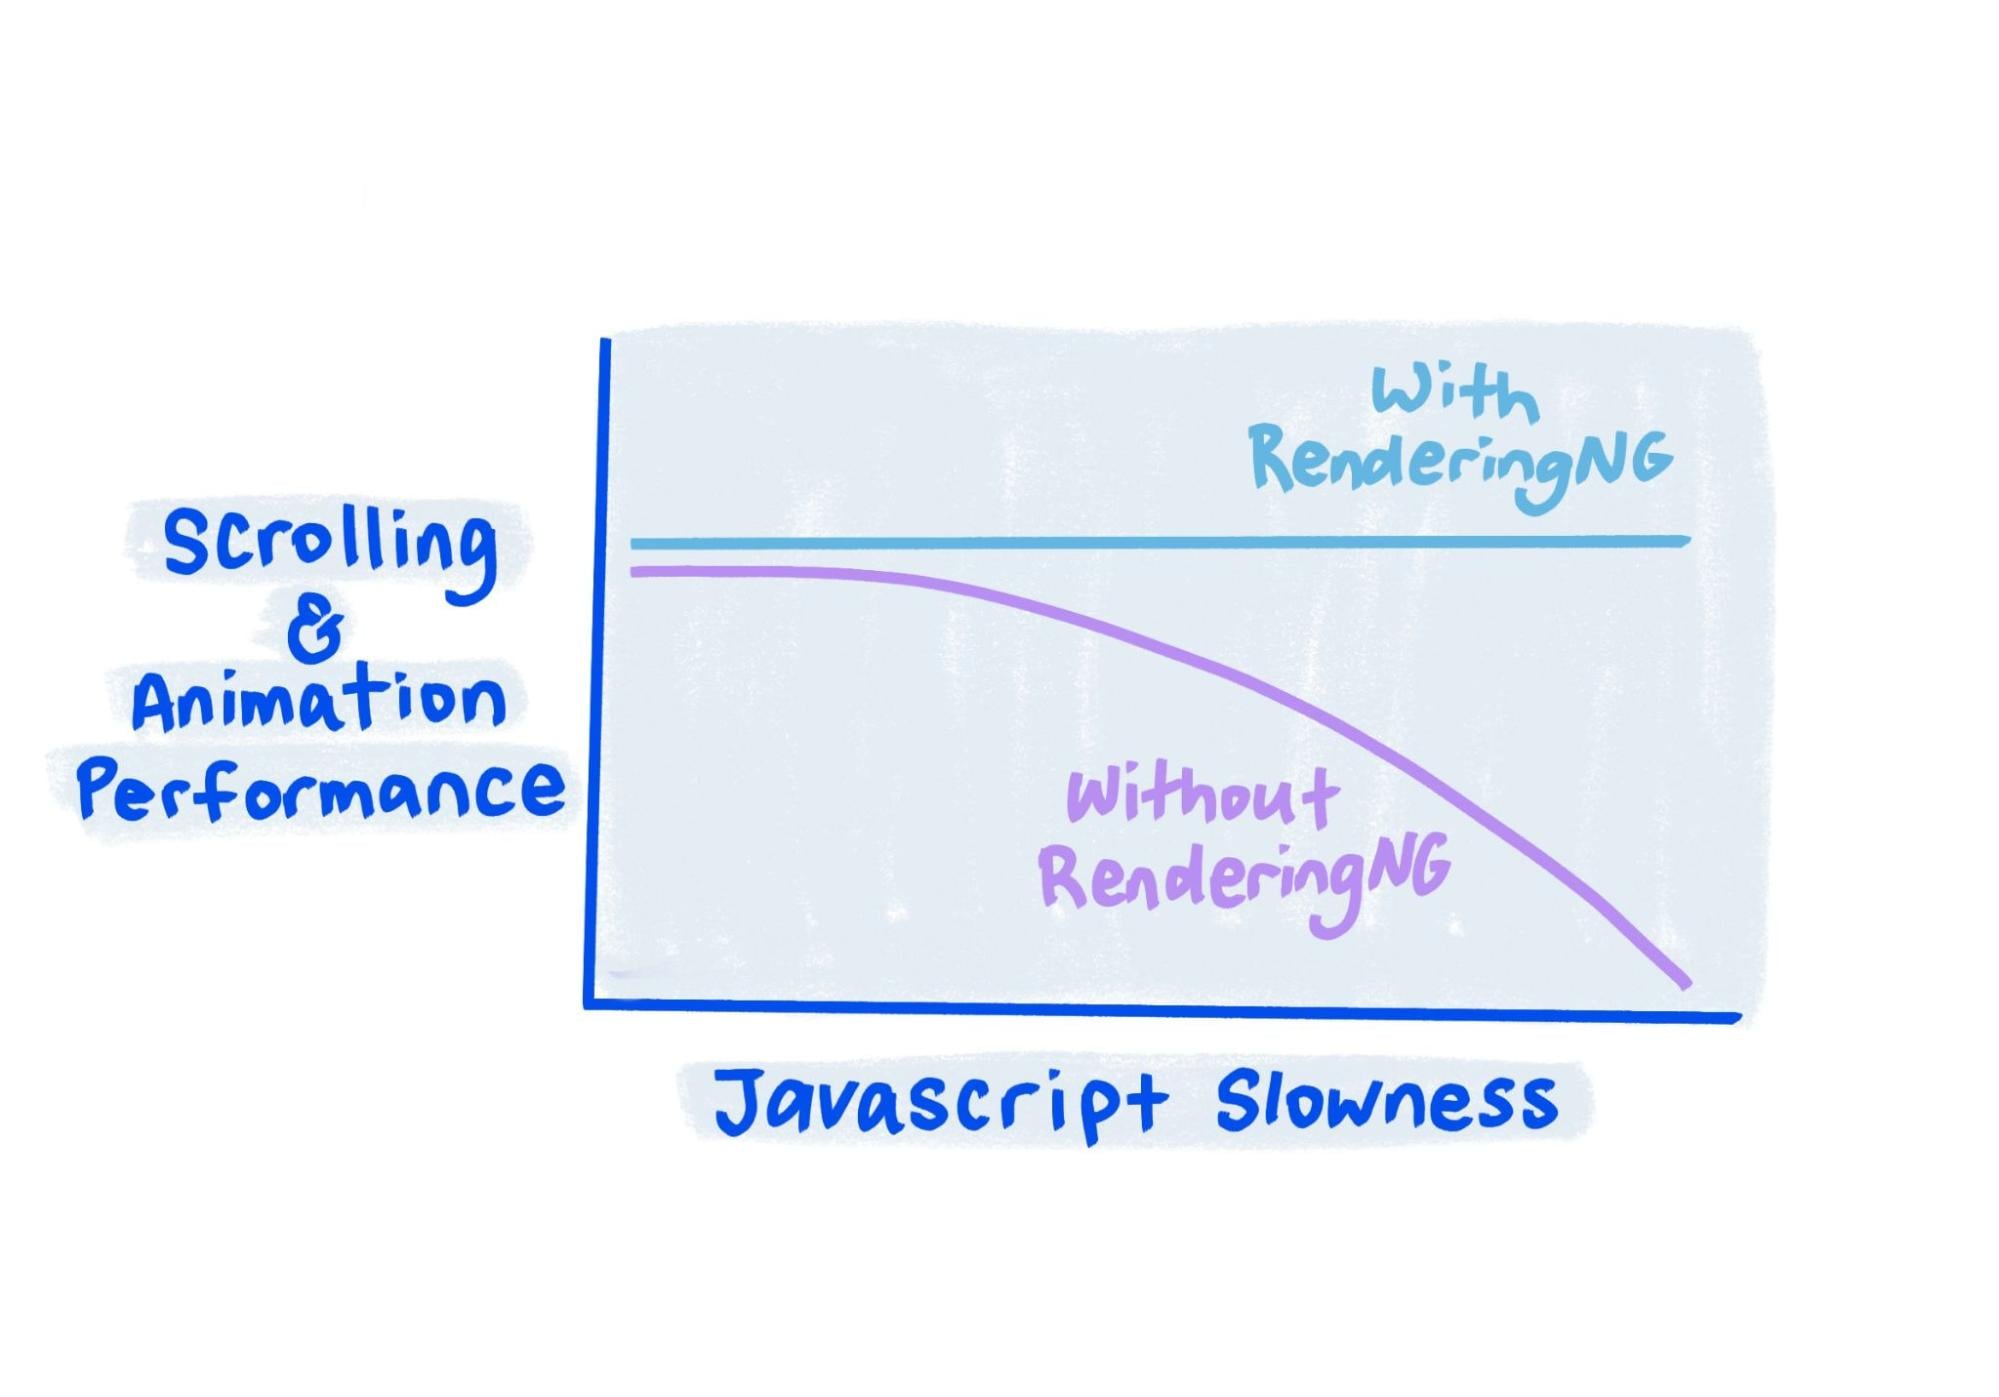 Sketch 表明，使用 RenderingNG 时，即使 JavaScript 运行速度非常缓慢，其性能也会保持稳定。